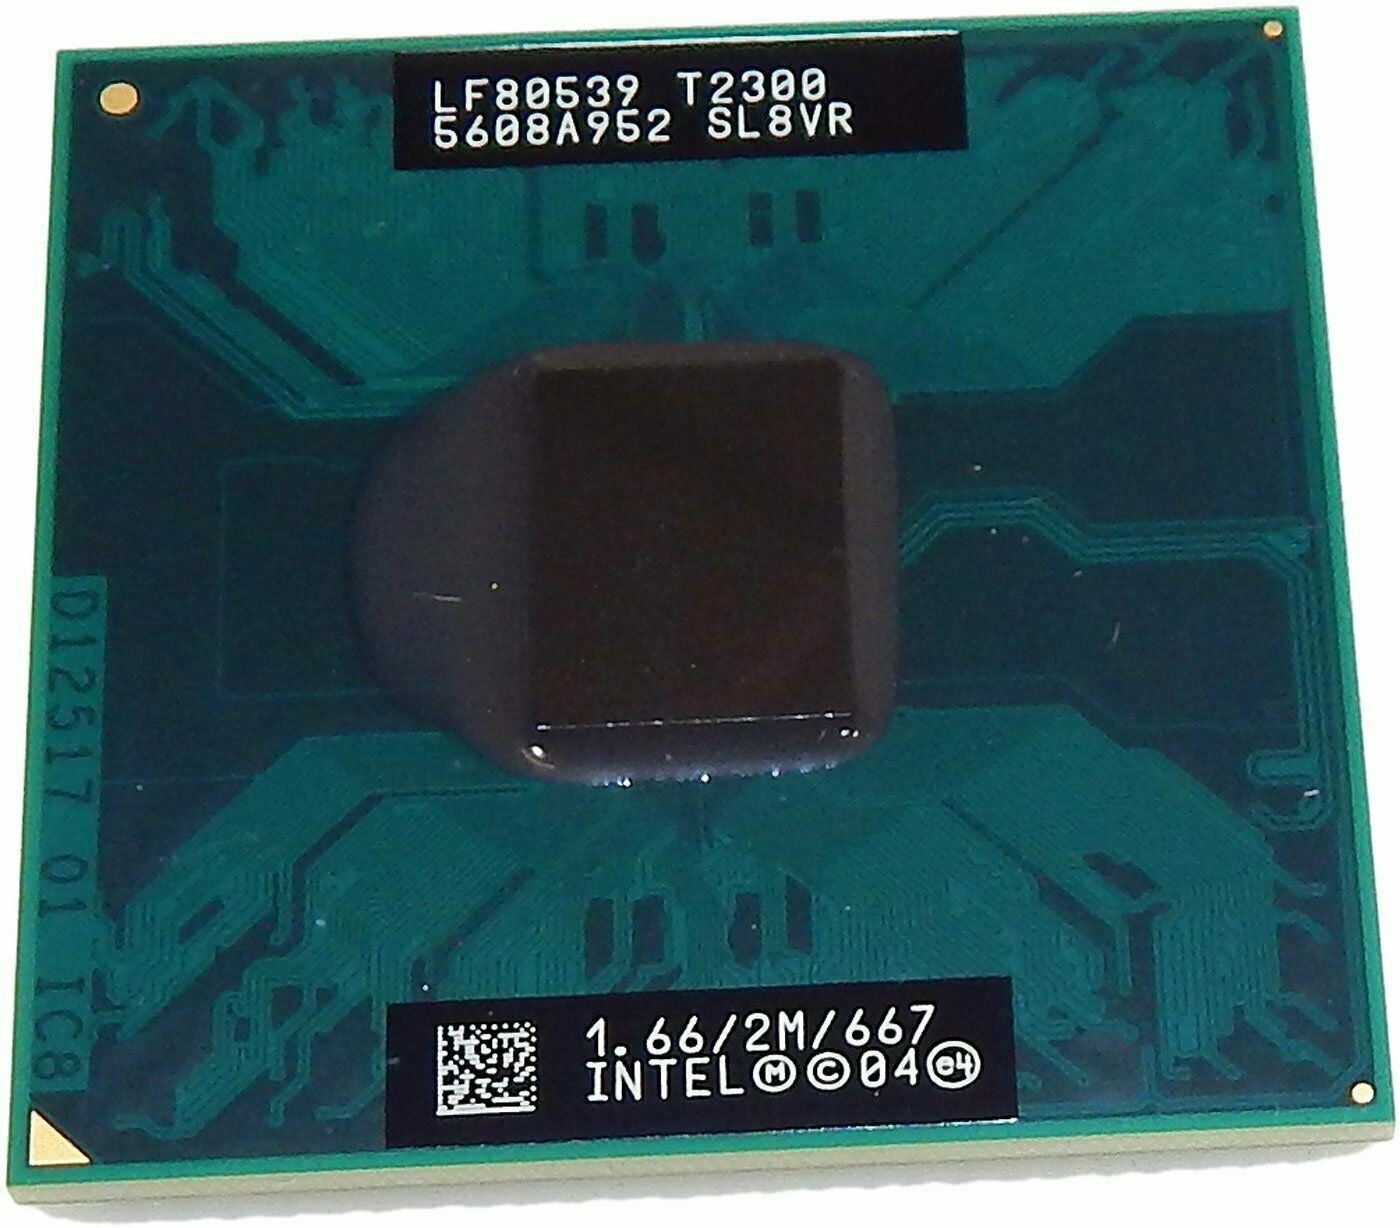 Intel Core Duo T2300 SL8VR 1.667 GHz CPU Microprocessor LF80539GF0282M 478 pin